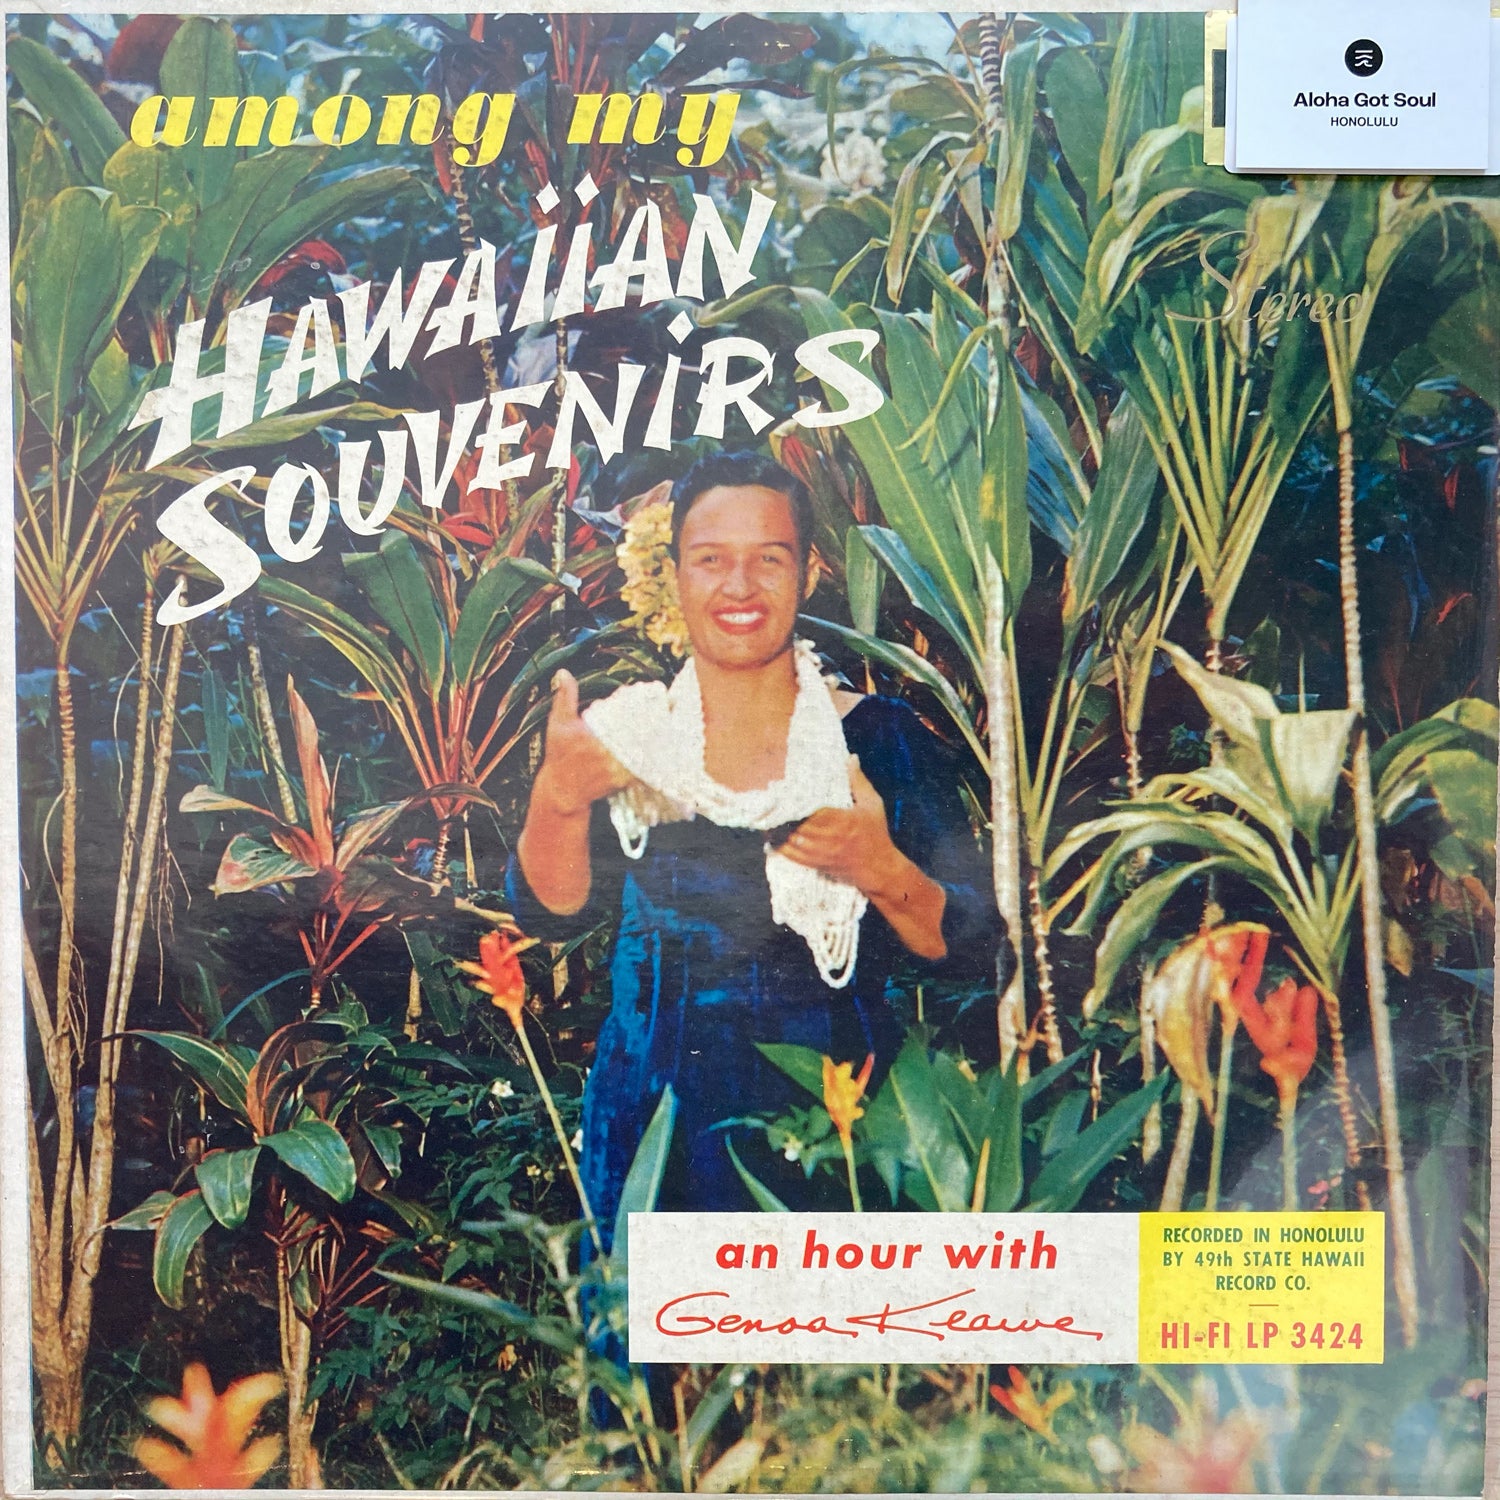 Genoa Keawe - Among My Hawaiian Souvenirs